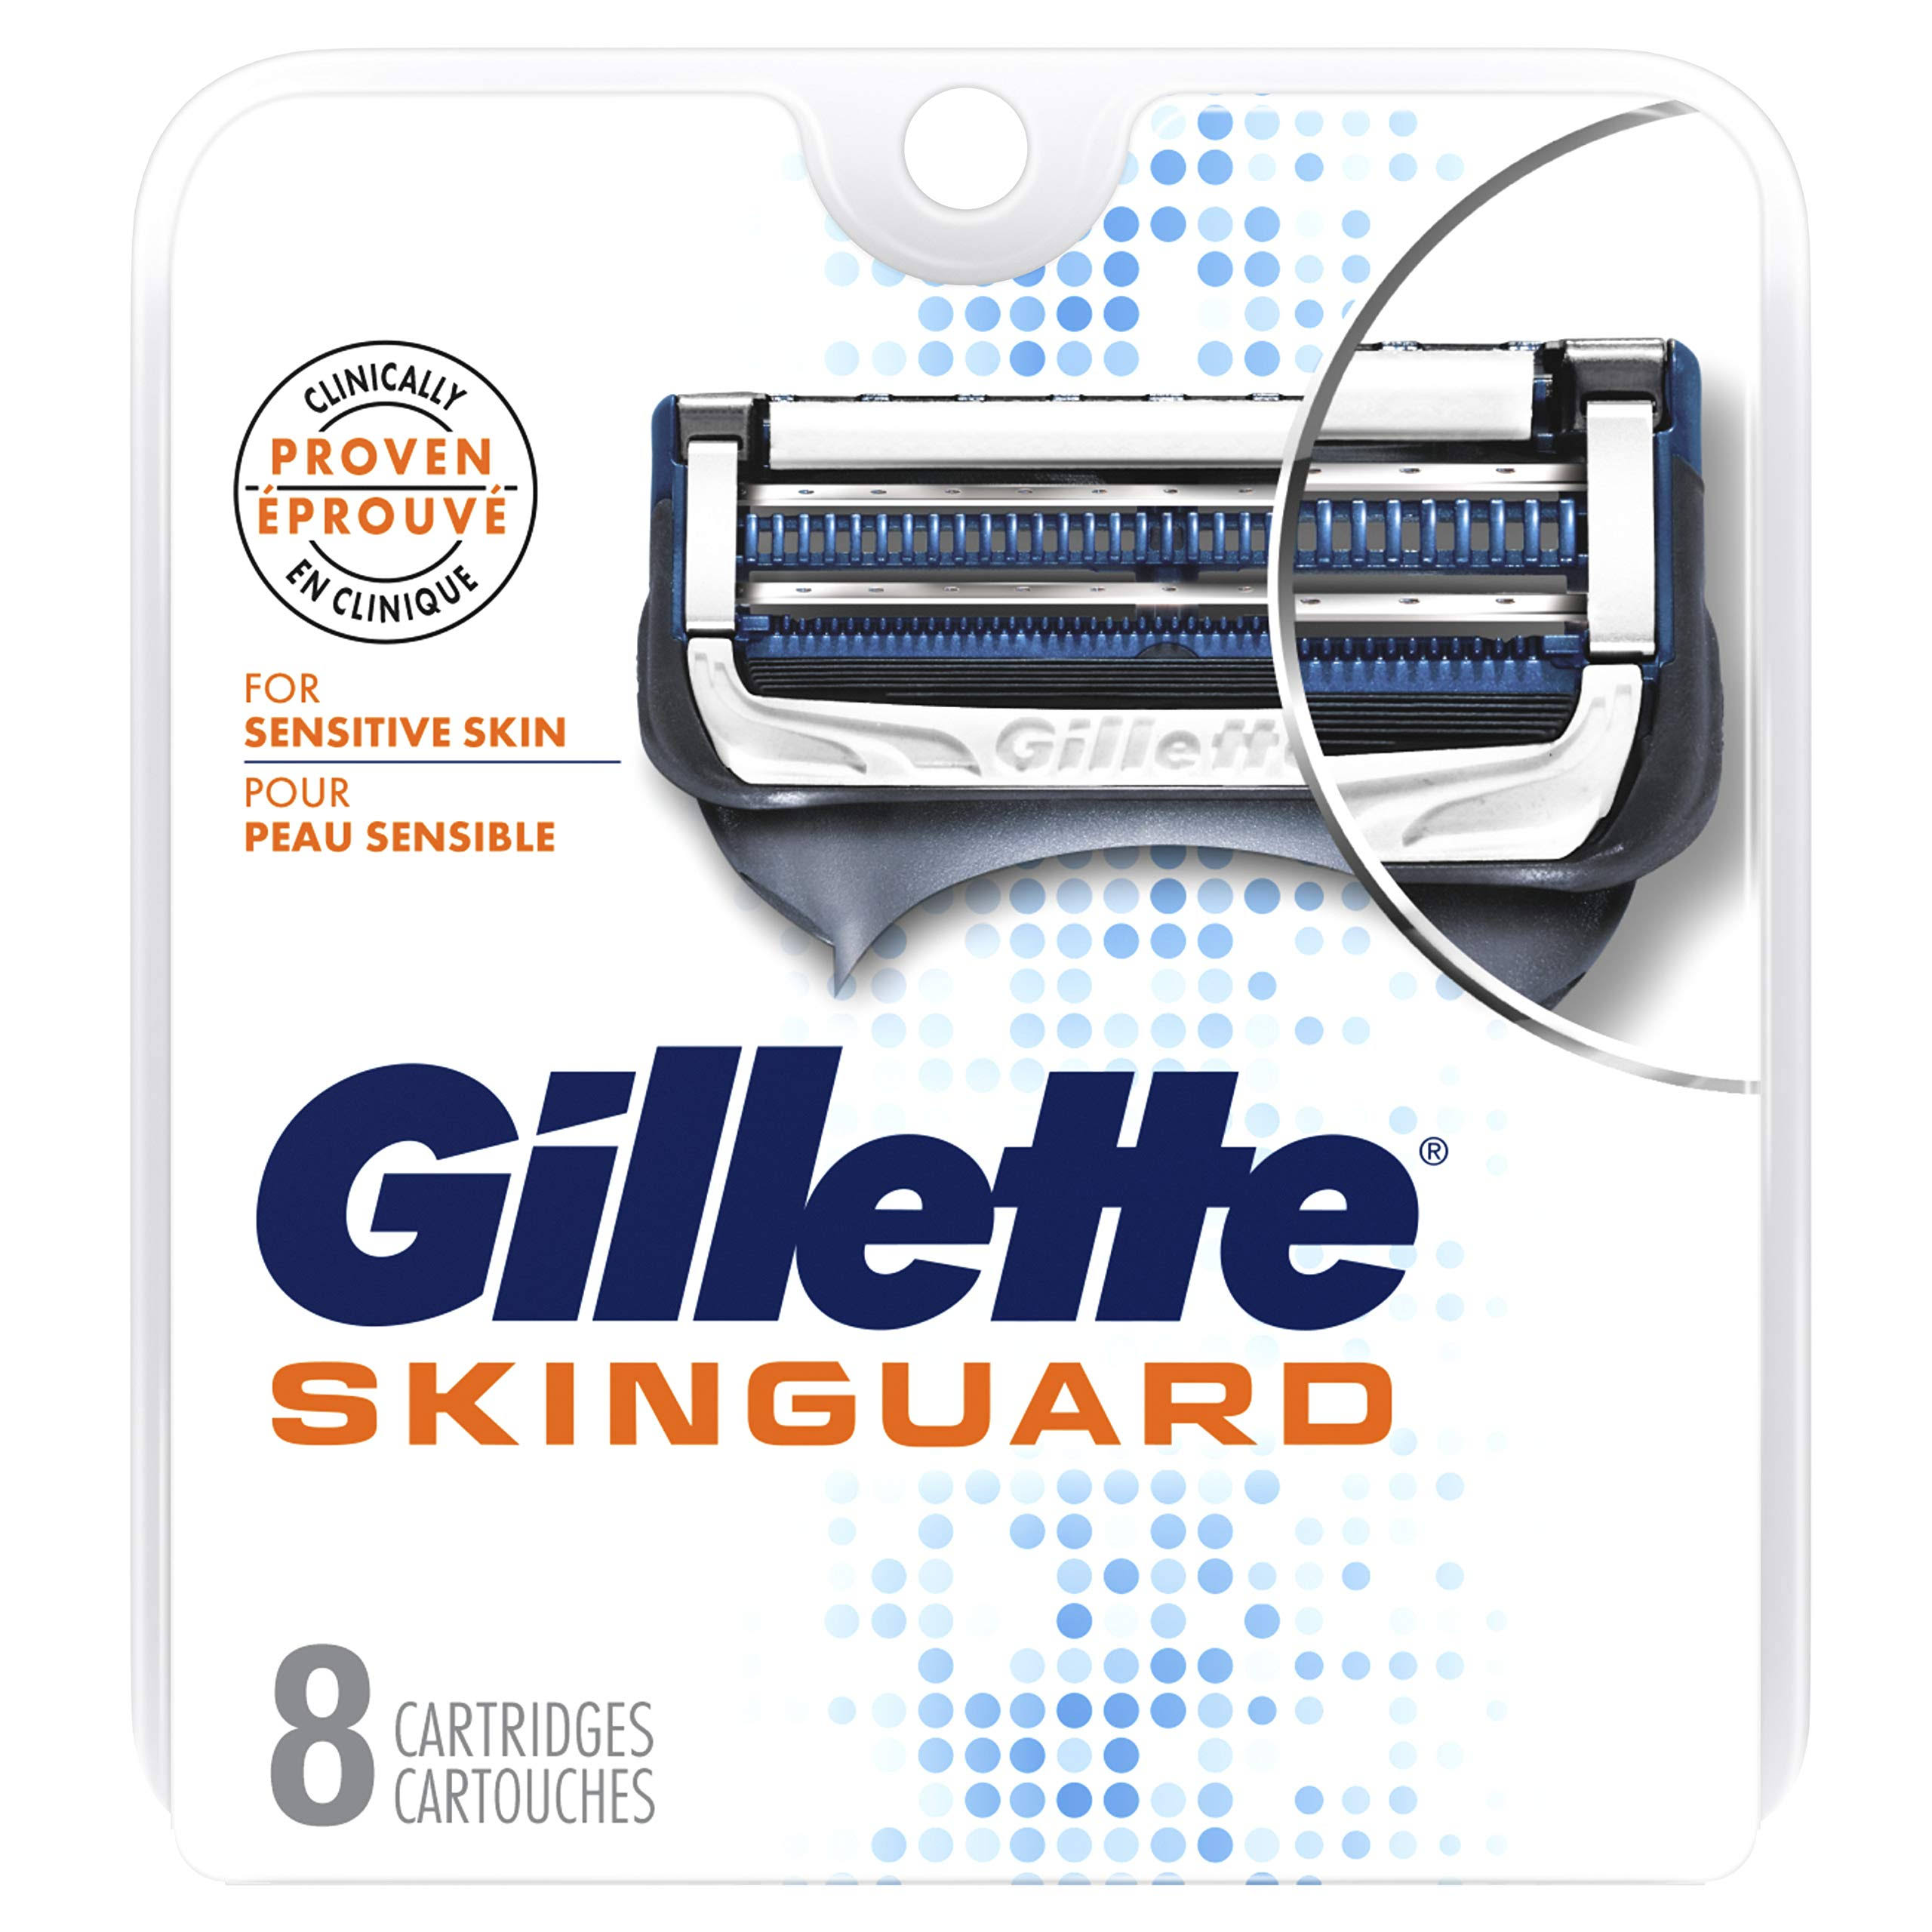 Gillette Skinguard Men S Razor Blade Refill for Sensitive Skin